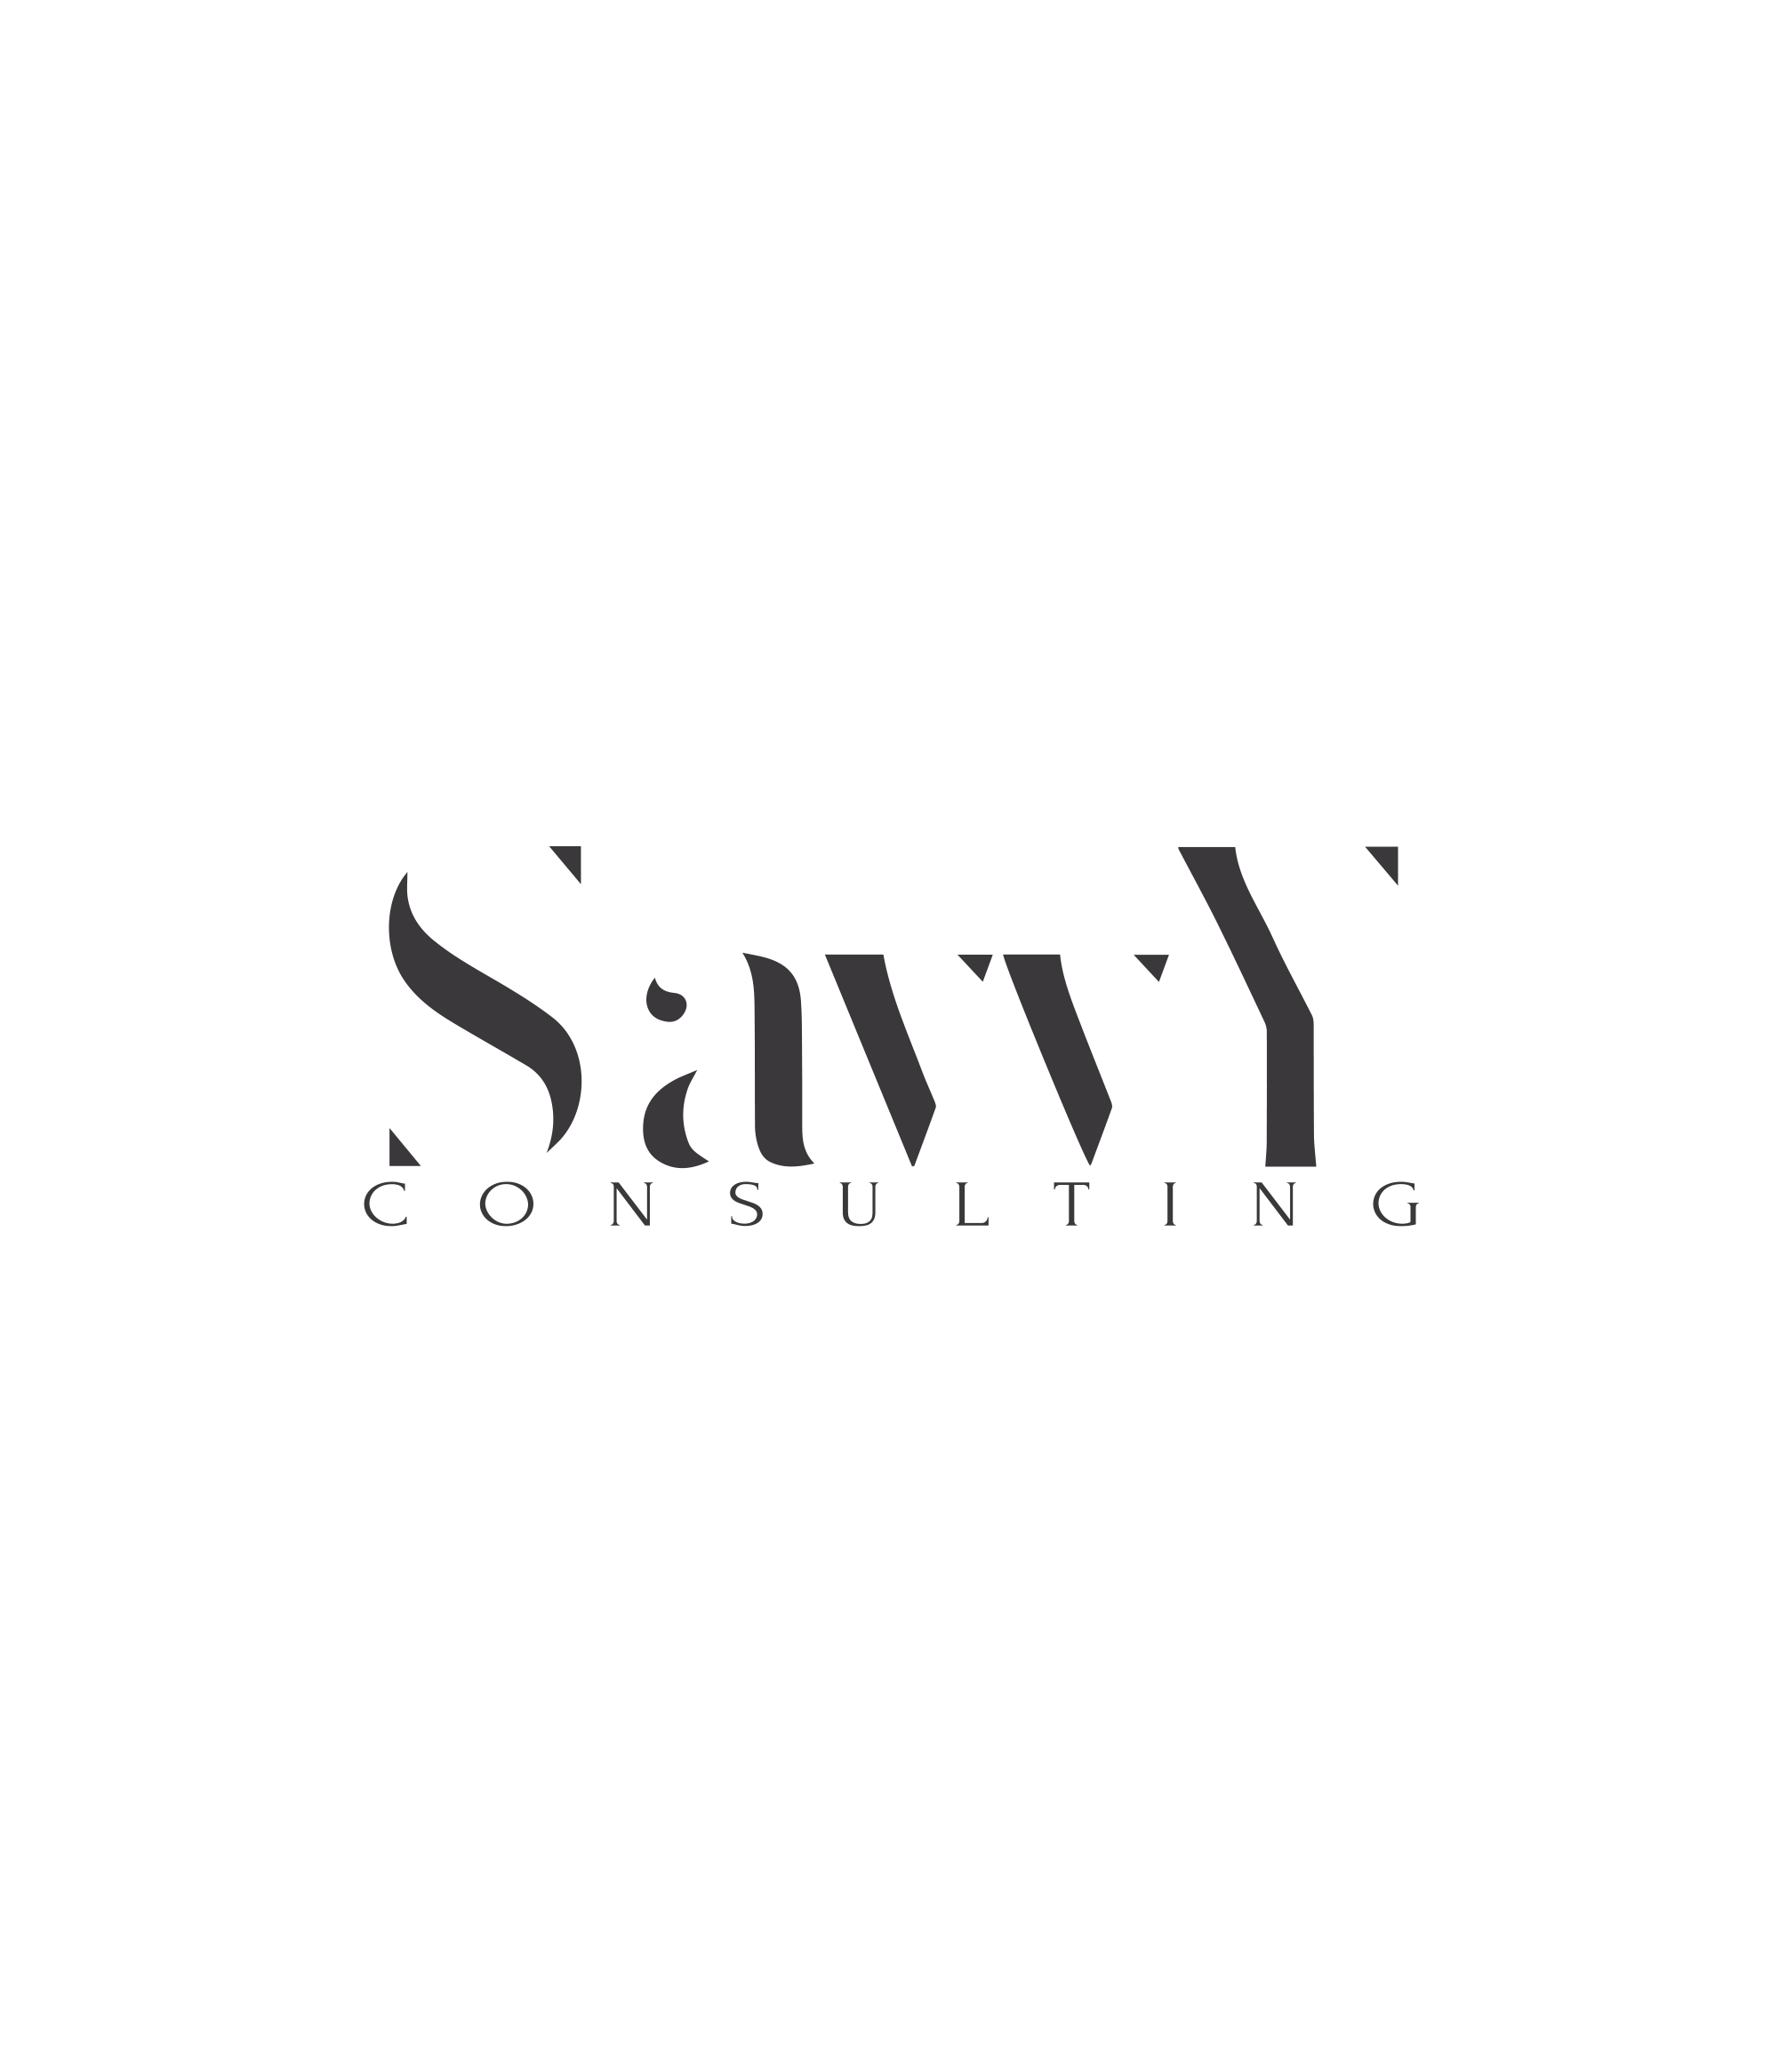 SavvY logo black.png